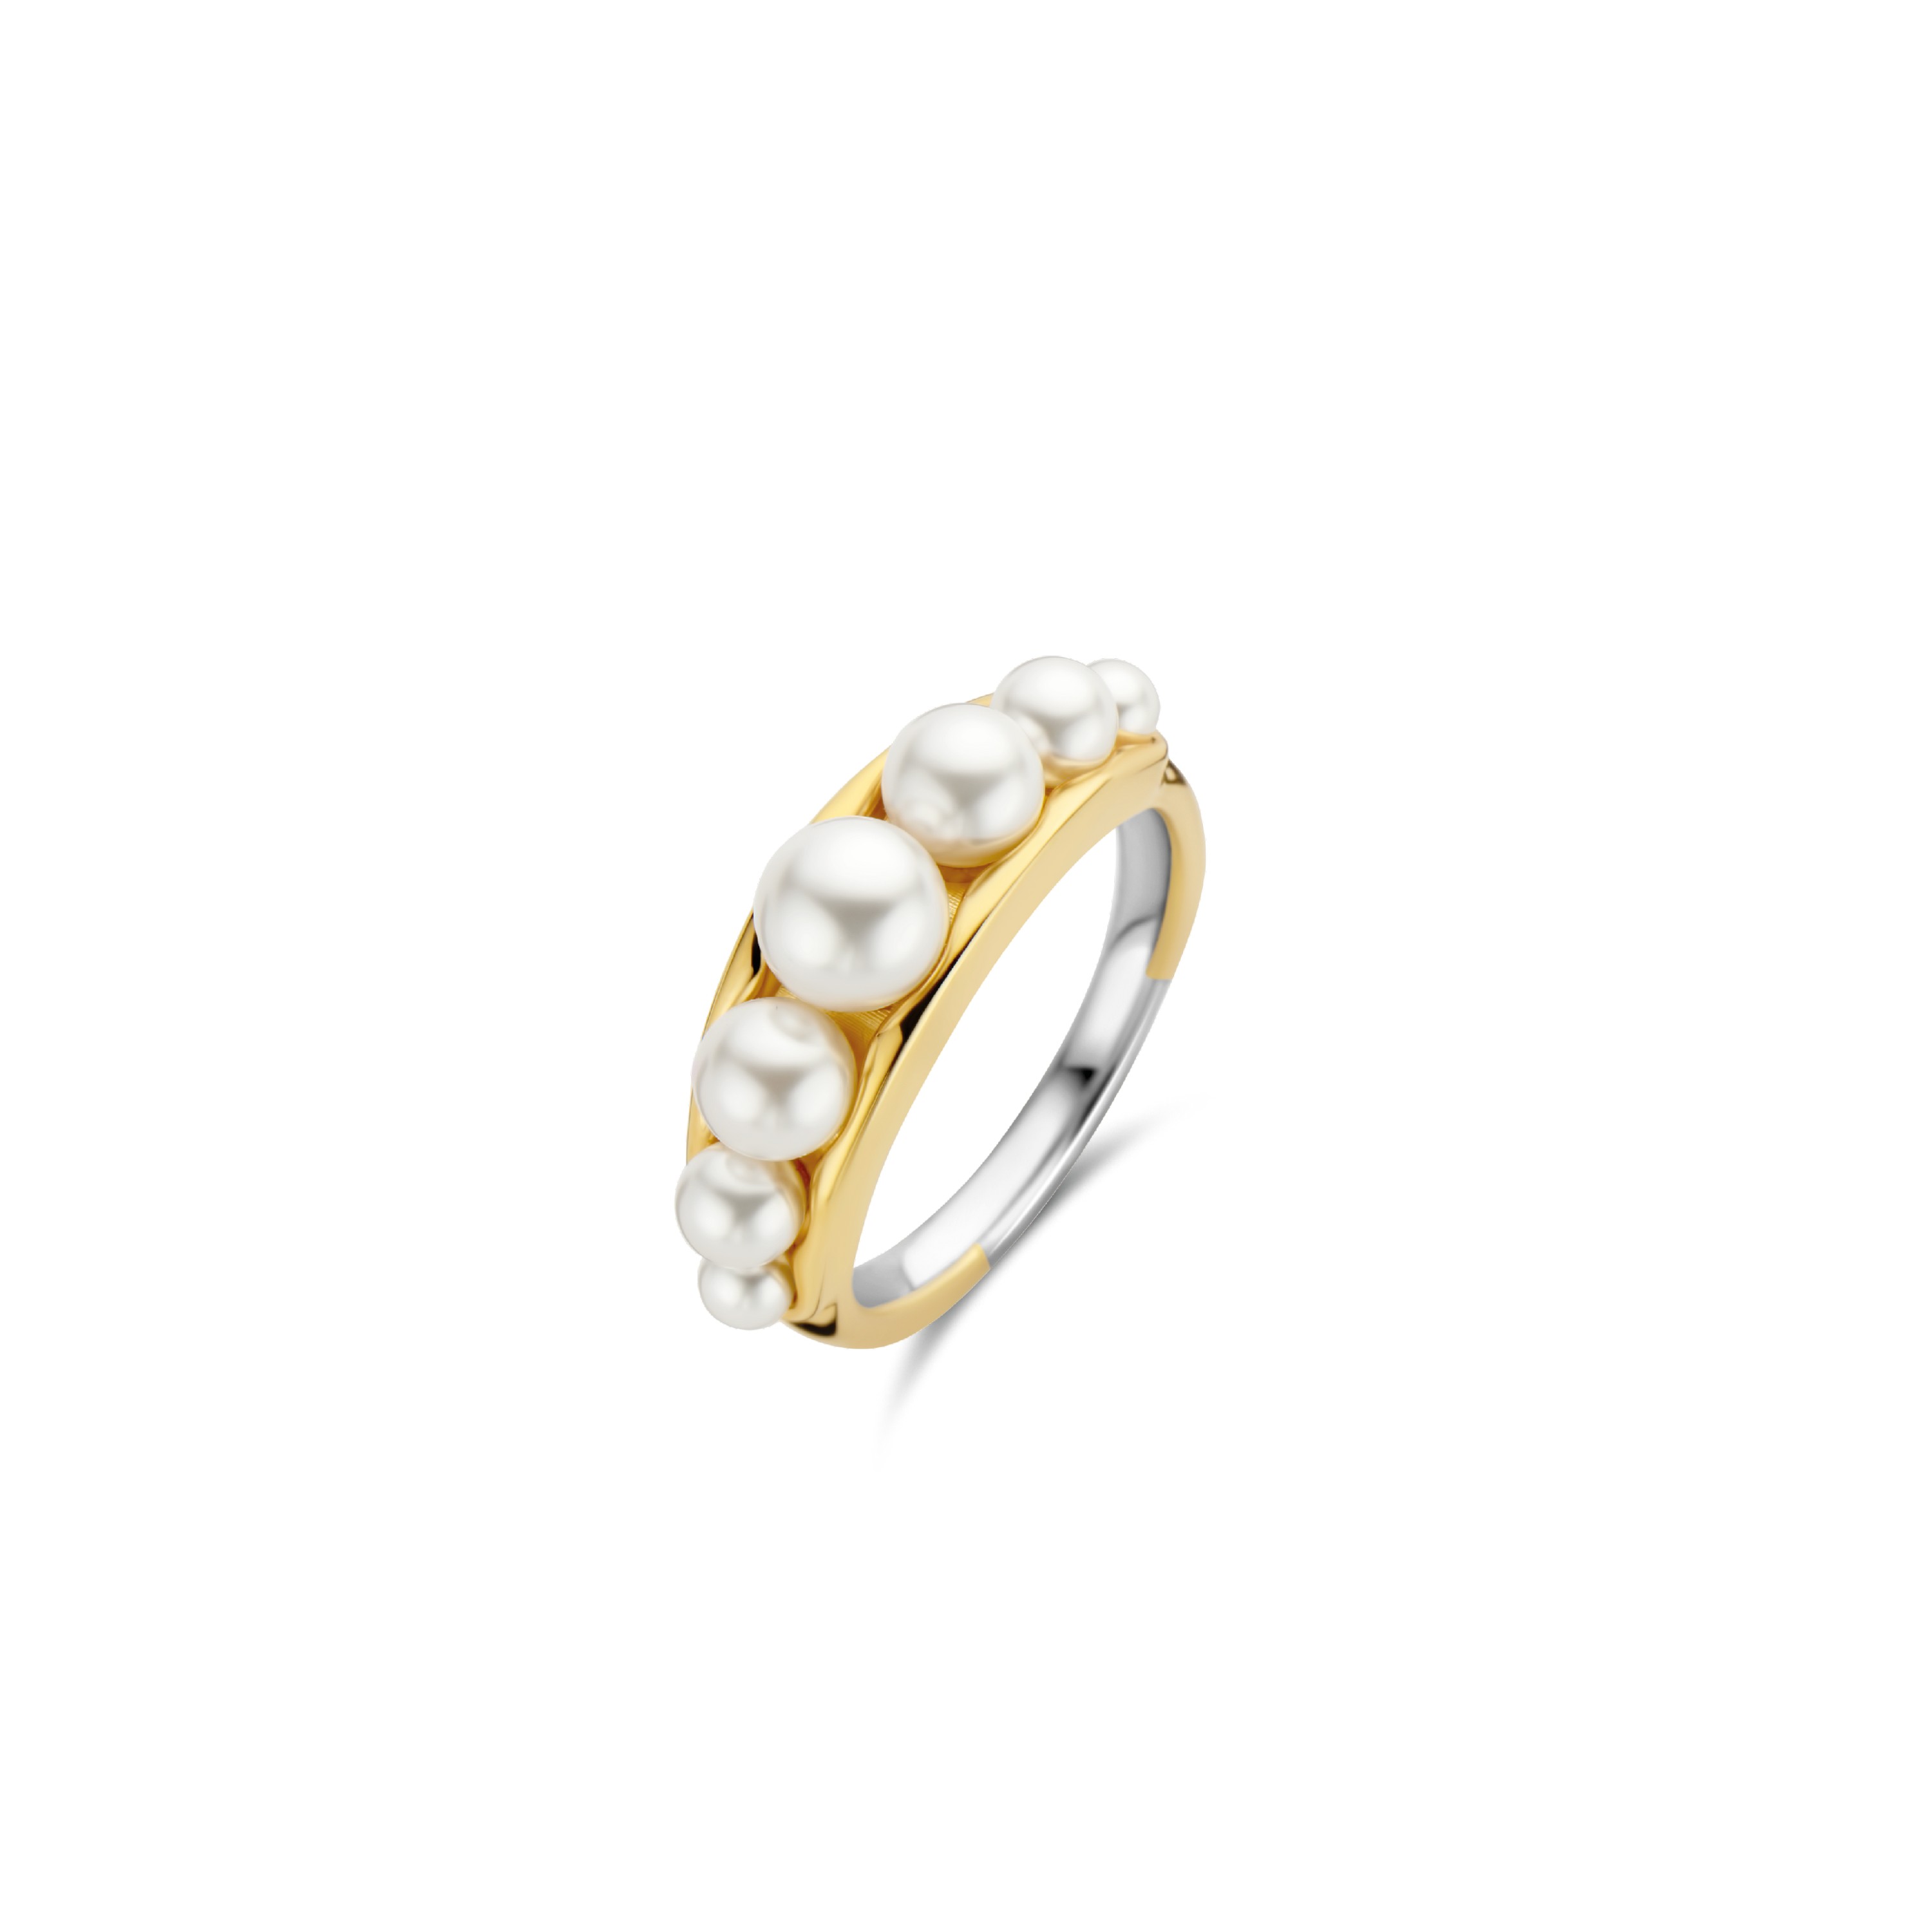 TI SENTO - Milano Ring 12232PW Gala Jewelers Inc. White Oak, PA